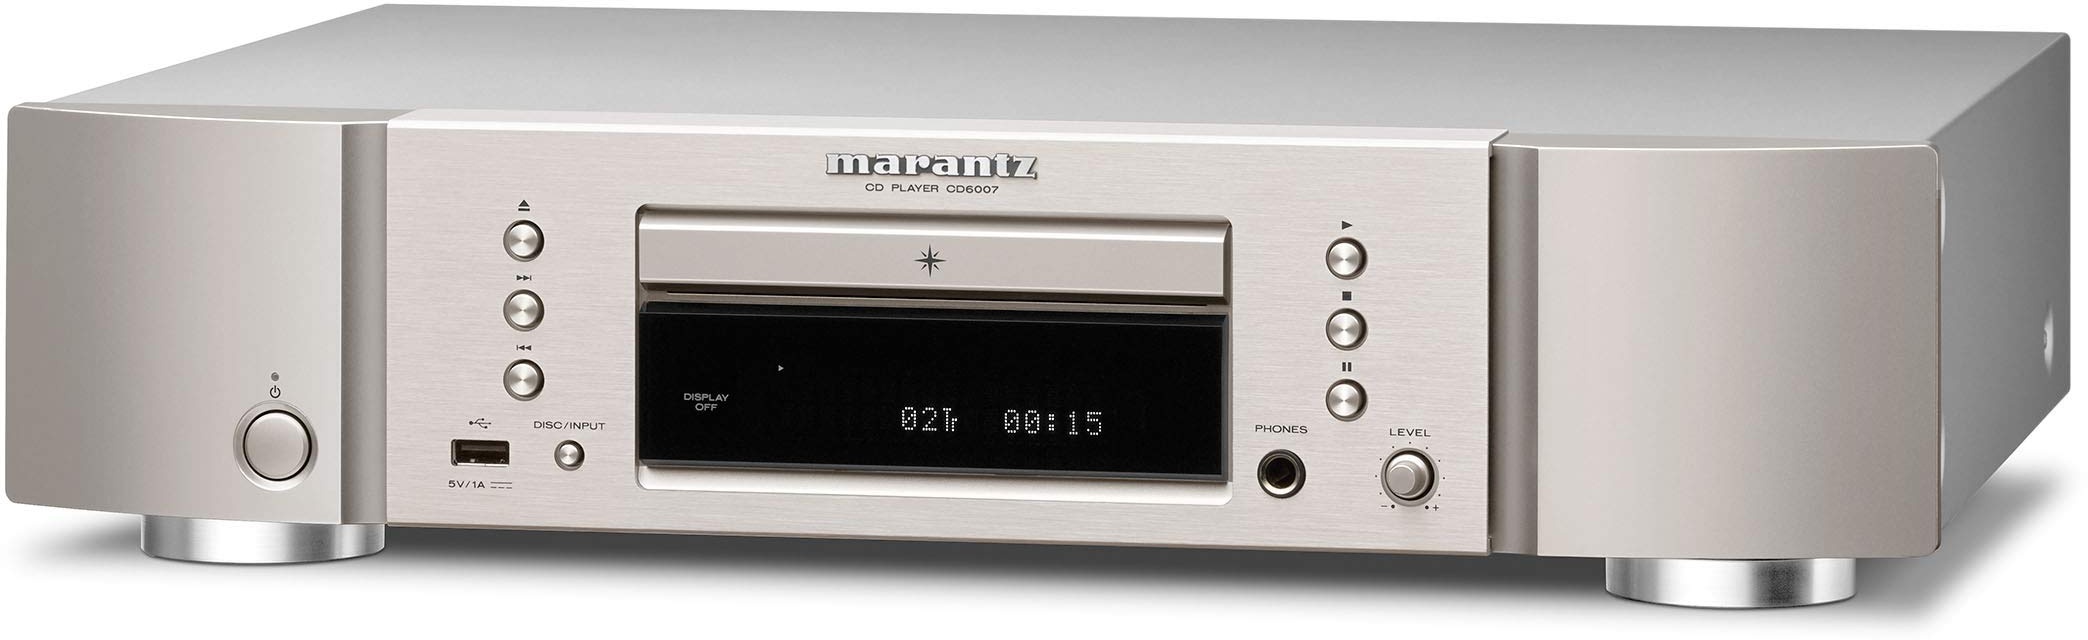 Marantz CD6007 HiFi CD Player, CD Spieler, CD- und CD-R/RW-Wiedergabe, USB, Kopfhörer-Verstärker, Silber-Gold, CD6007/N1SG